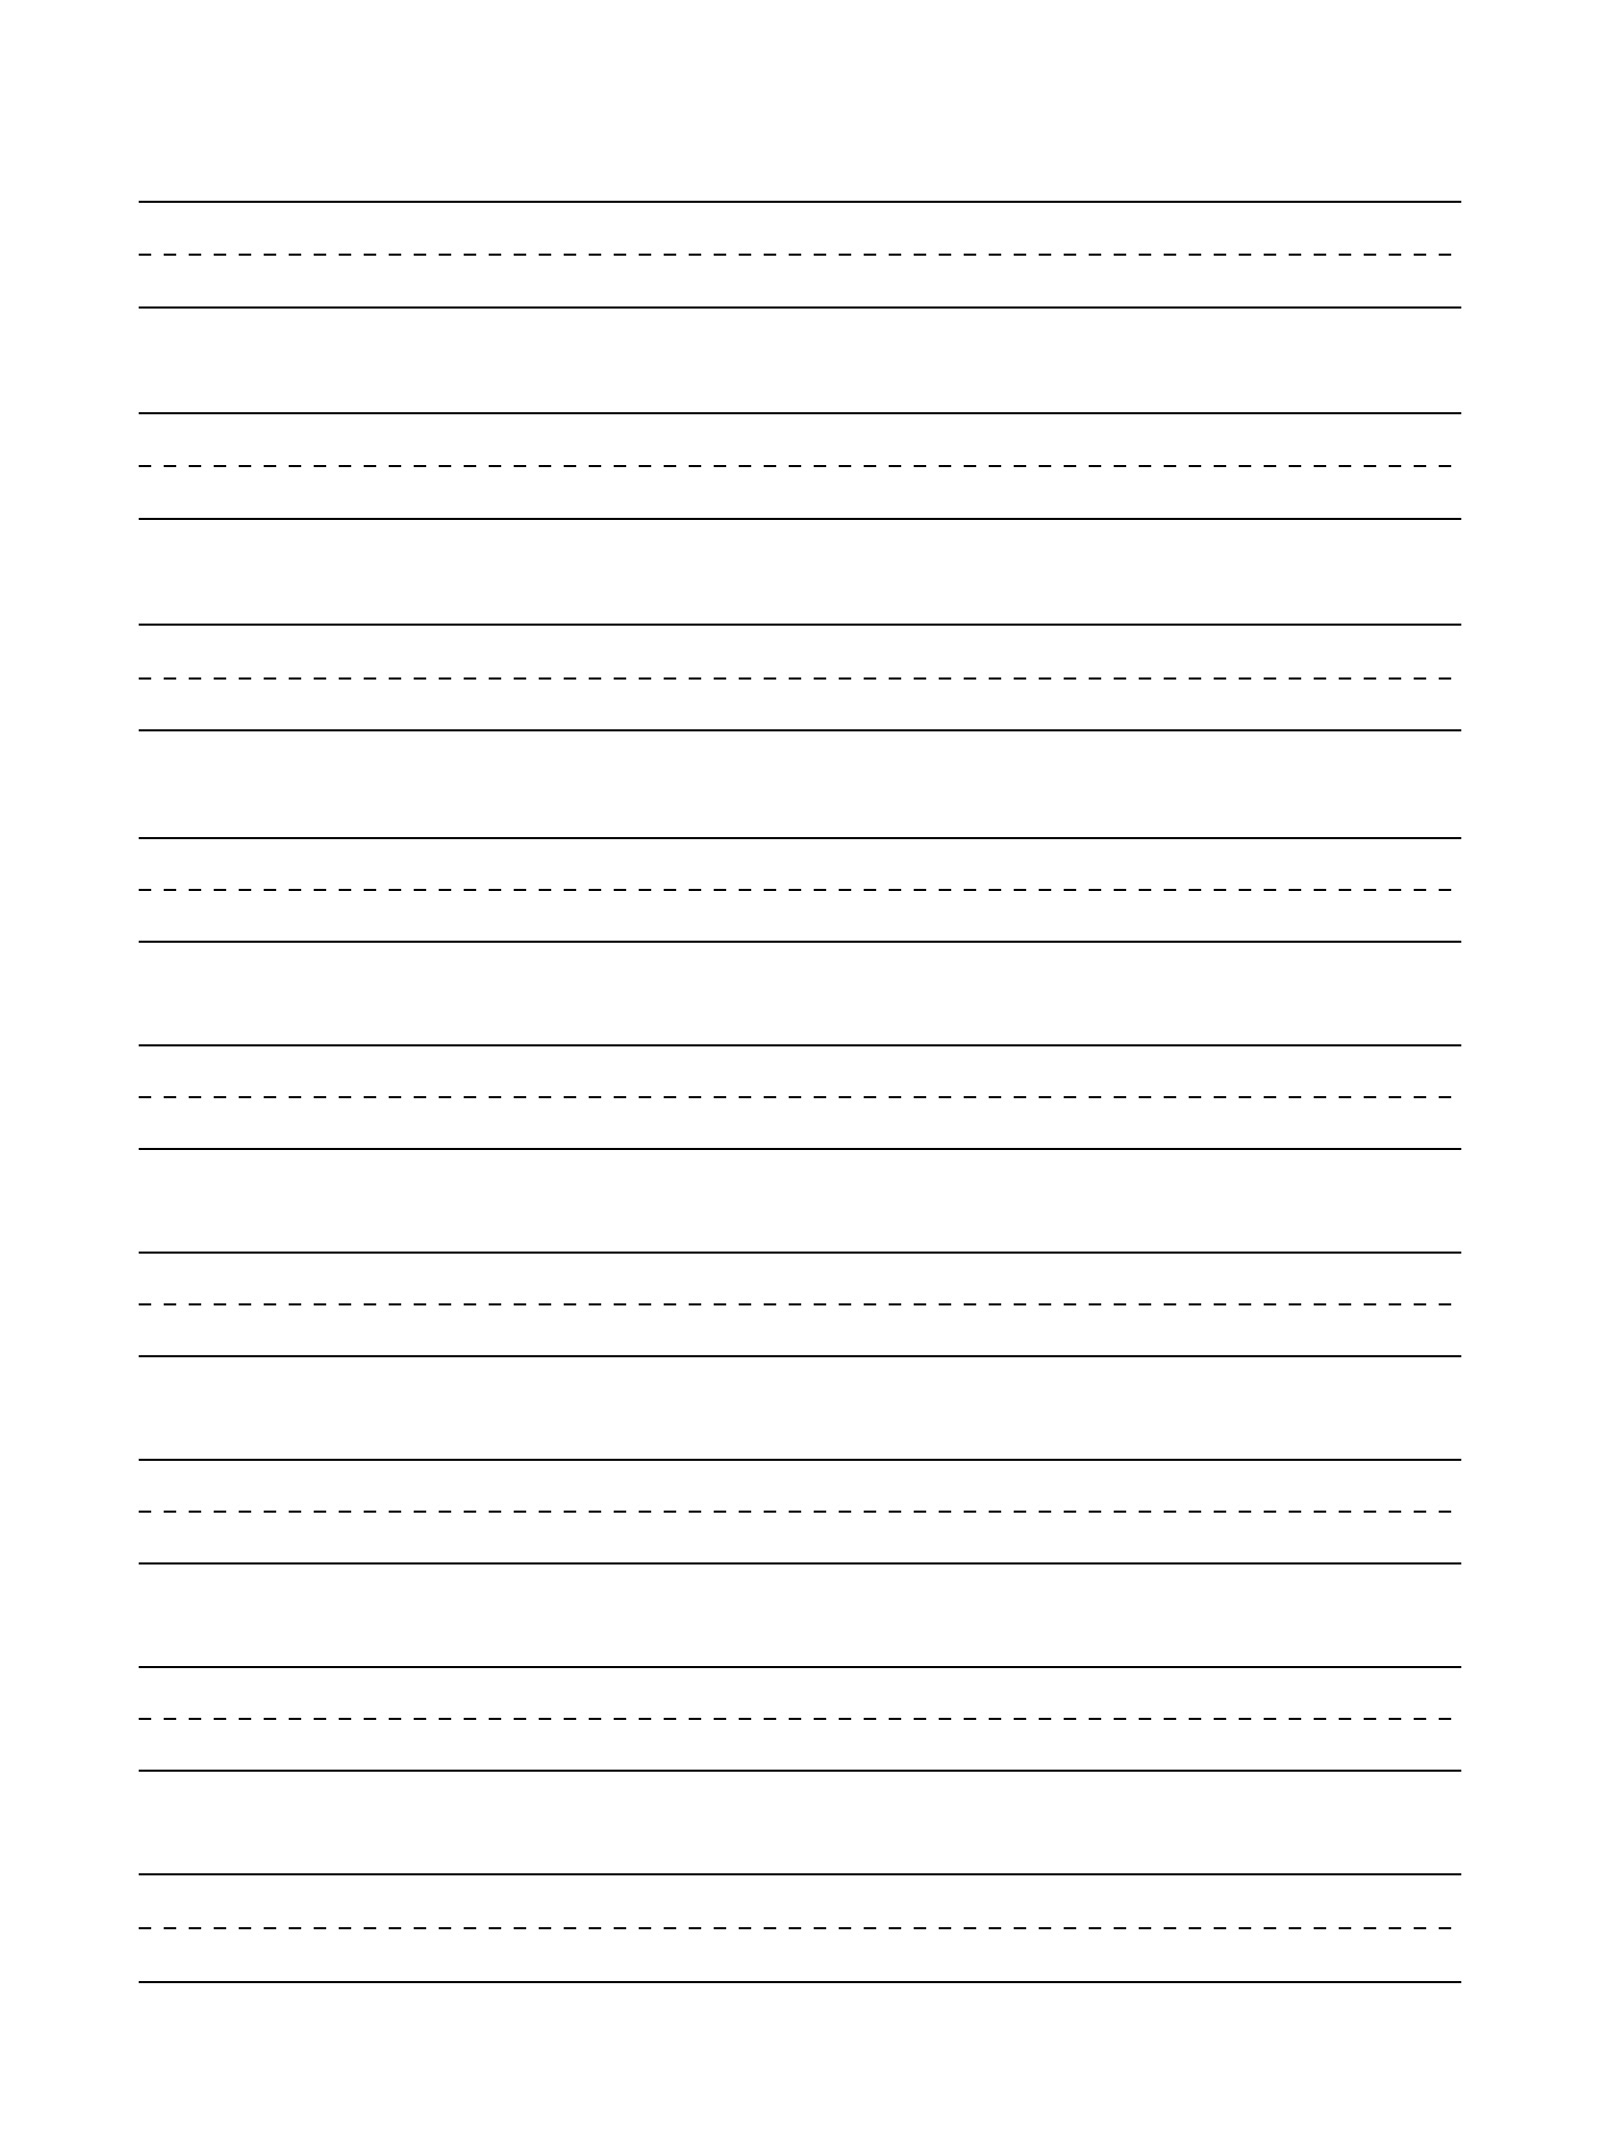 Half Inch Writing Lines image